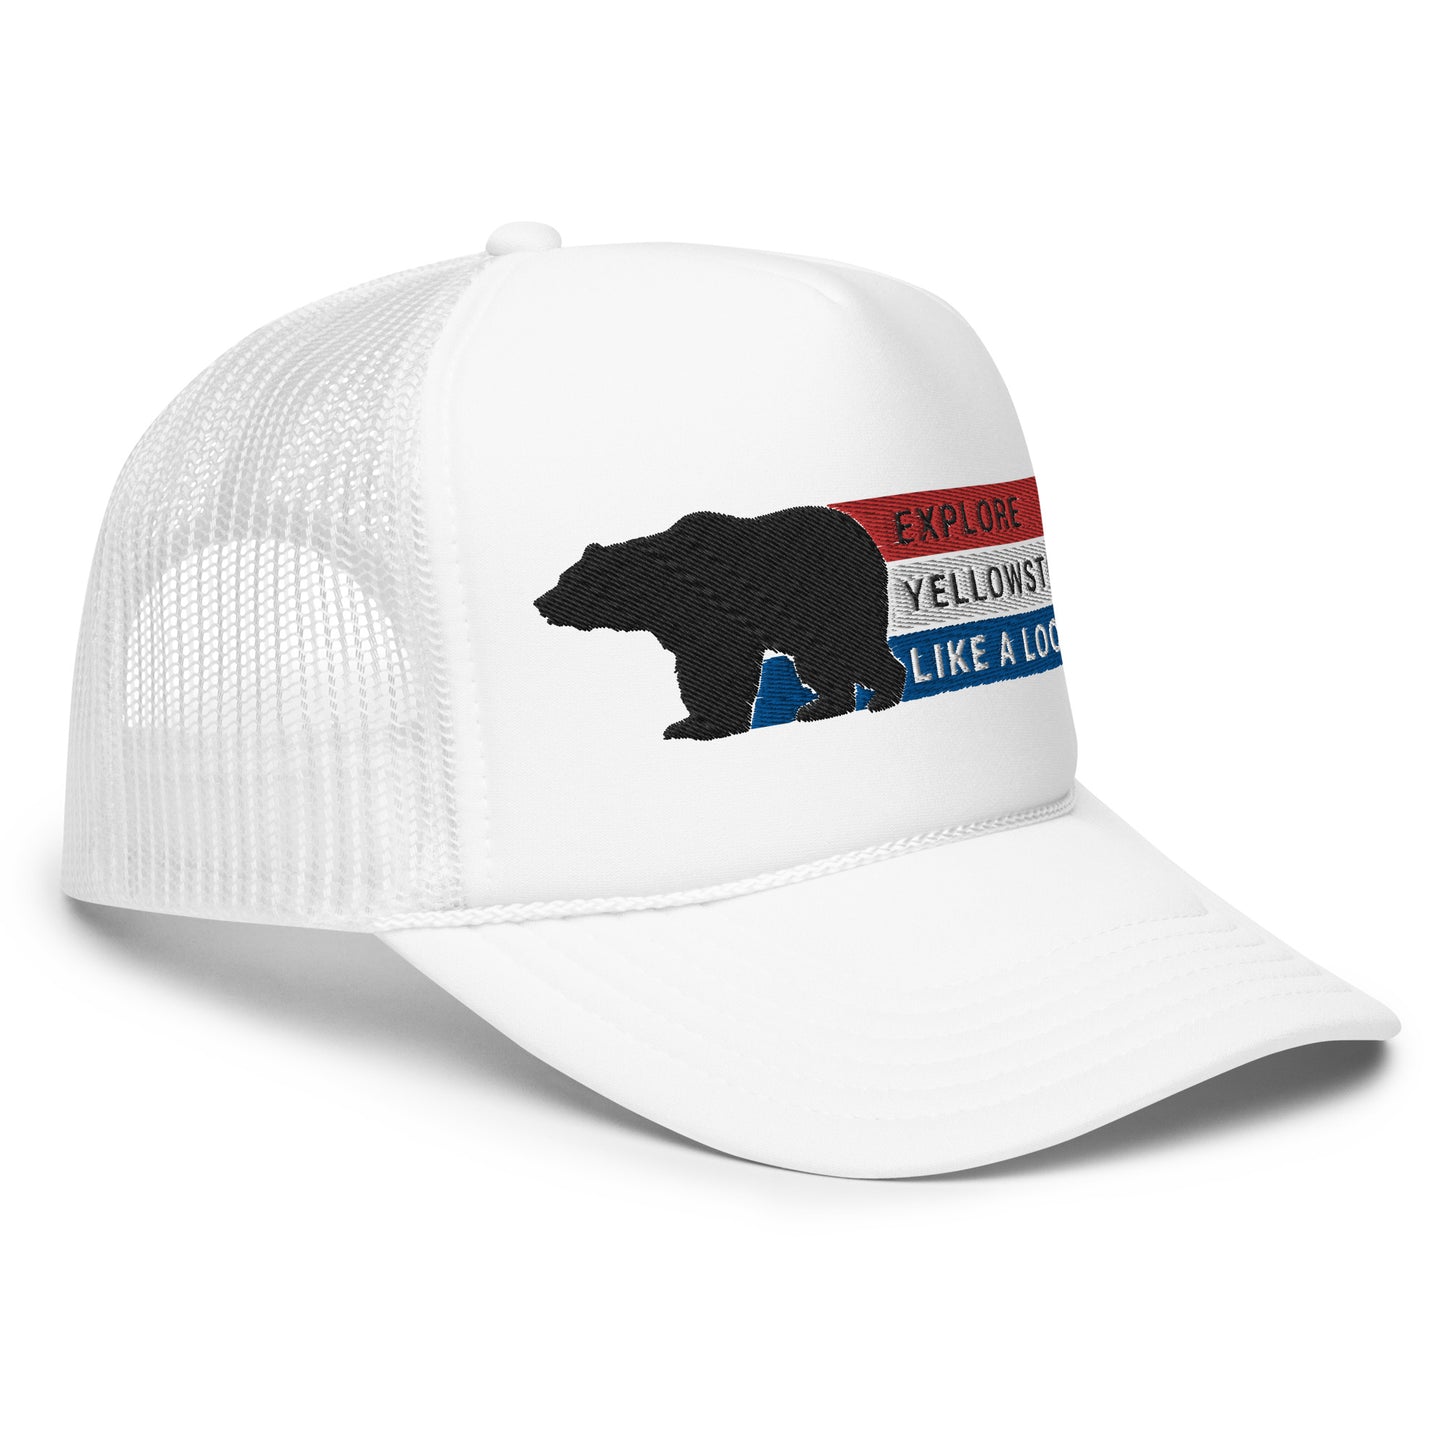 Explore Yellowstone Like a Local Patriotic Foam trucker hat